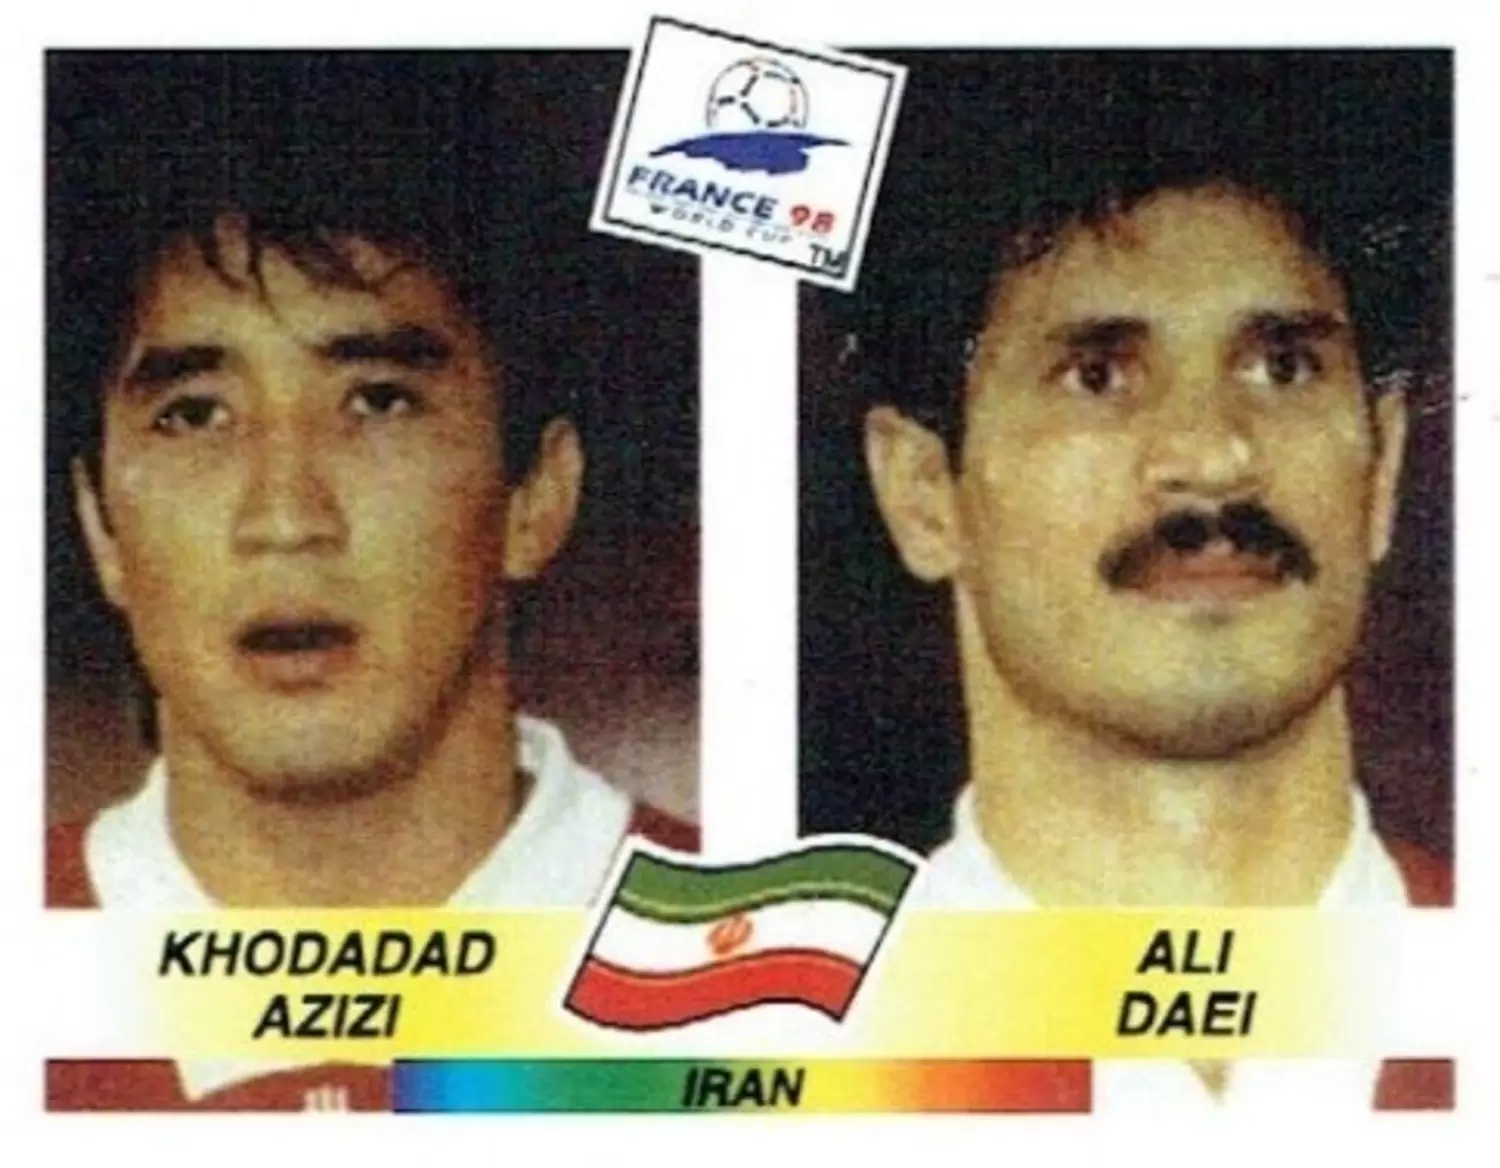 France 98 - Khodadad Azizi / Ali Daei - IRN